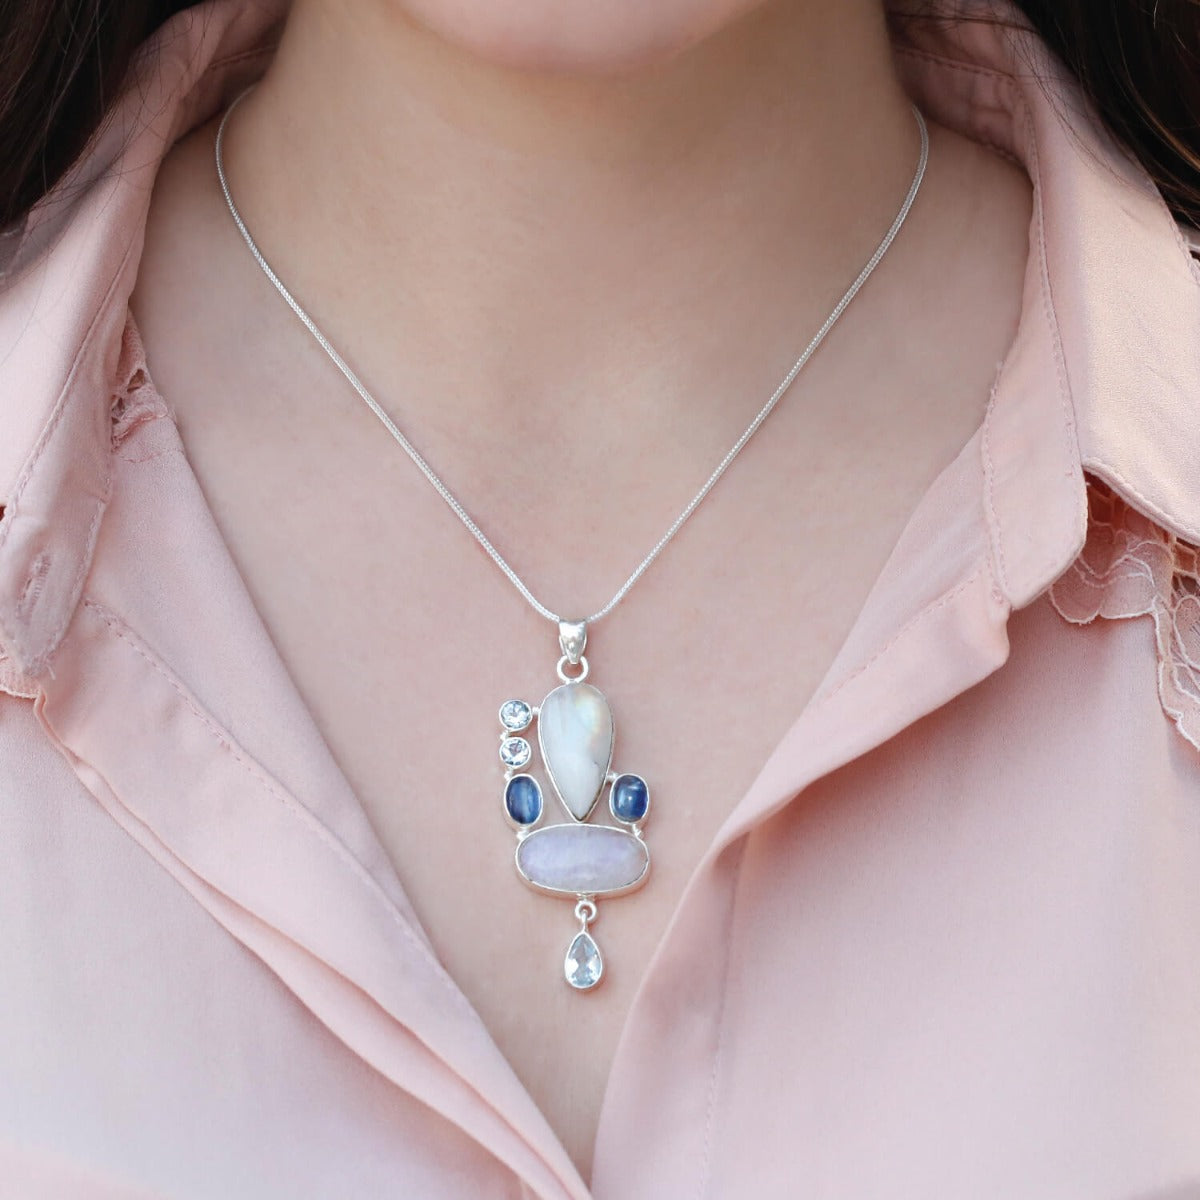 silver pendant, sterling silver pendant, moonstone pendant, white pendant, silver white pendant